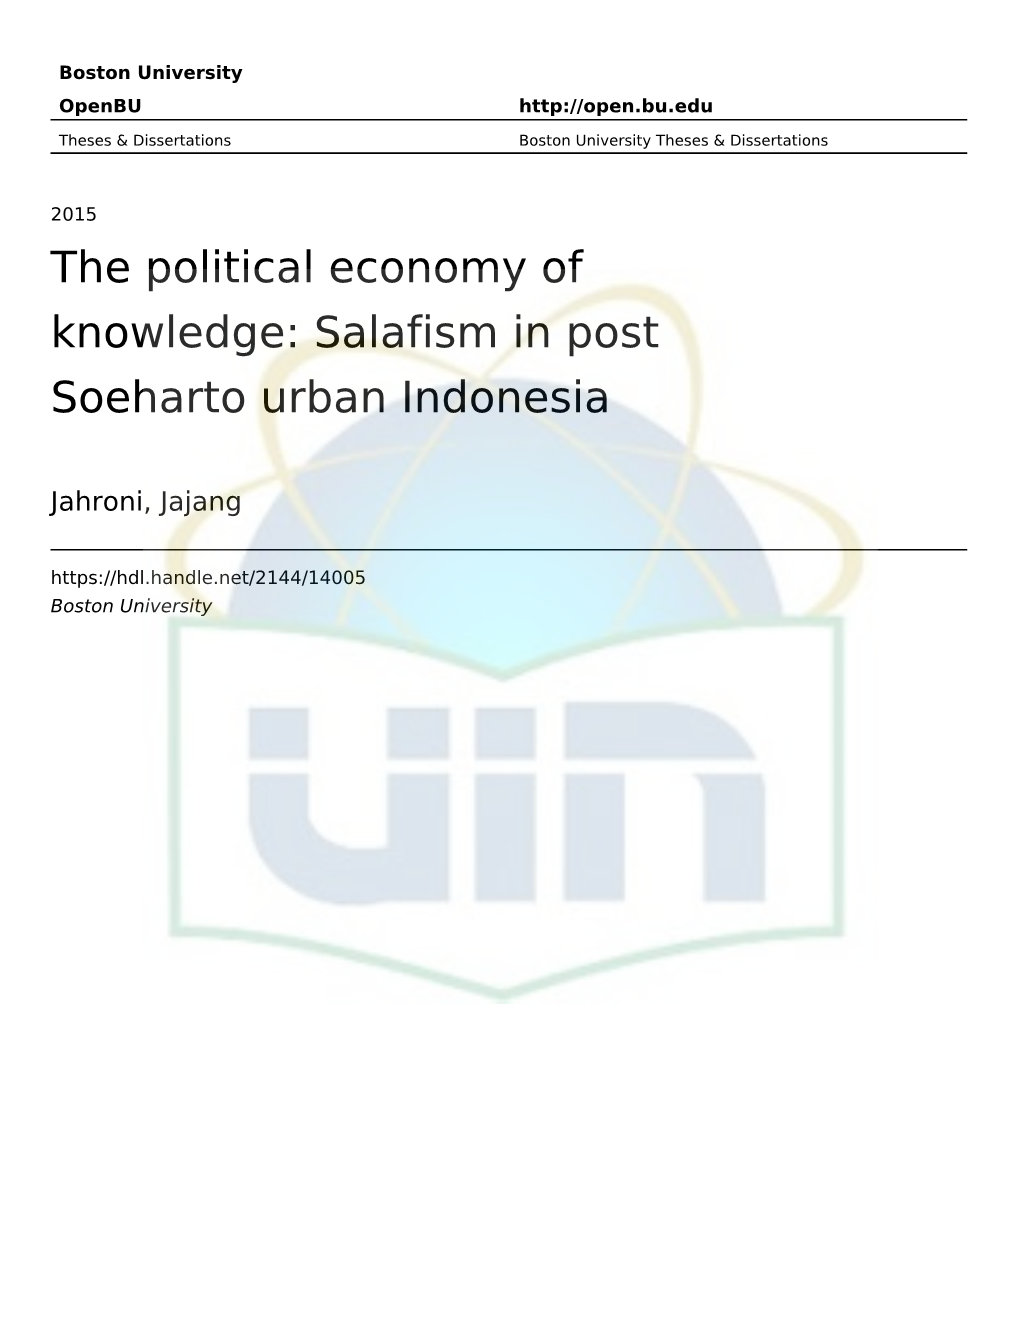 Salafism in Post Soeharto Urban Indonesia